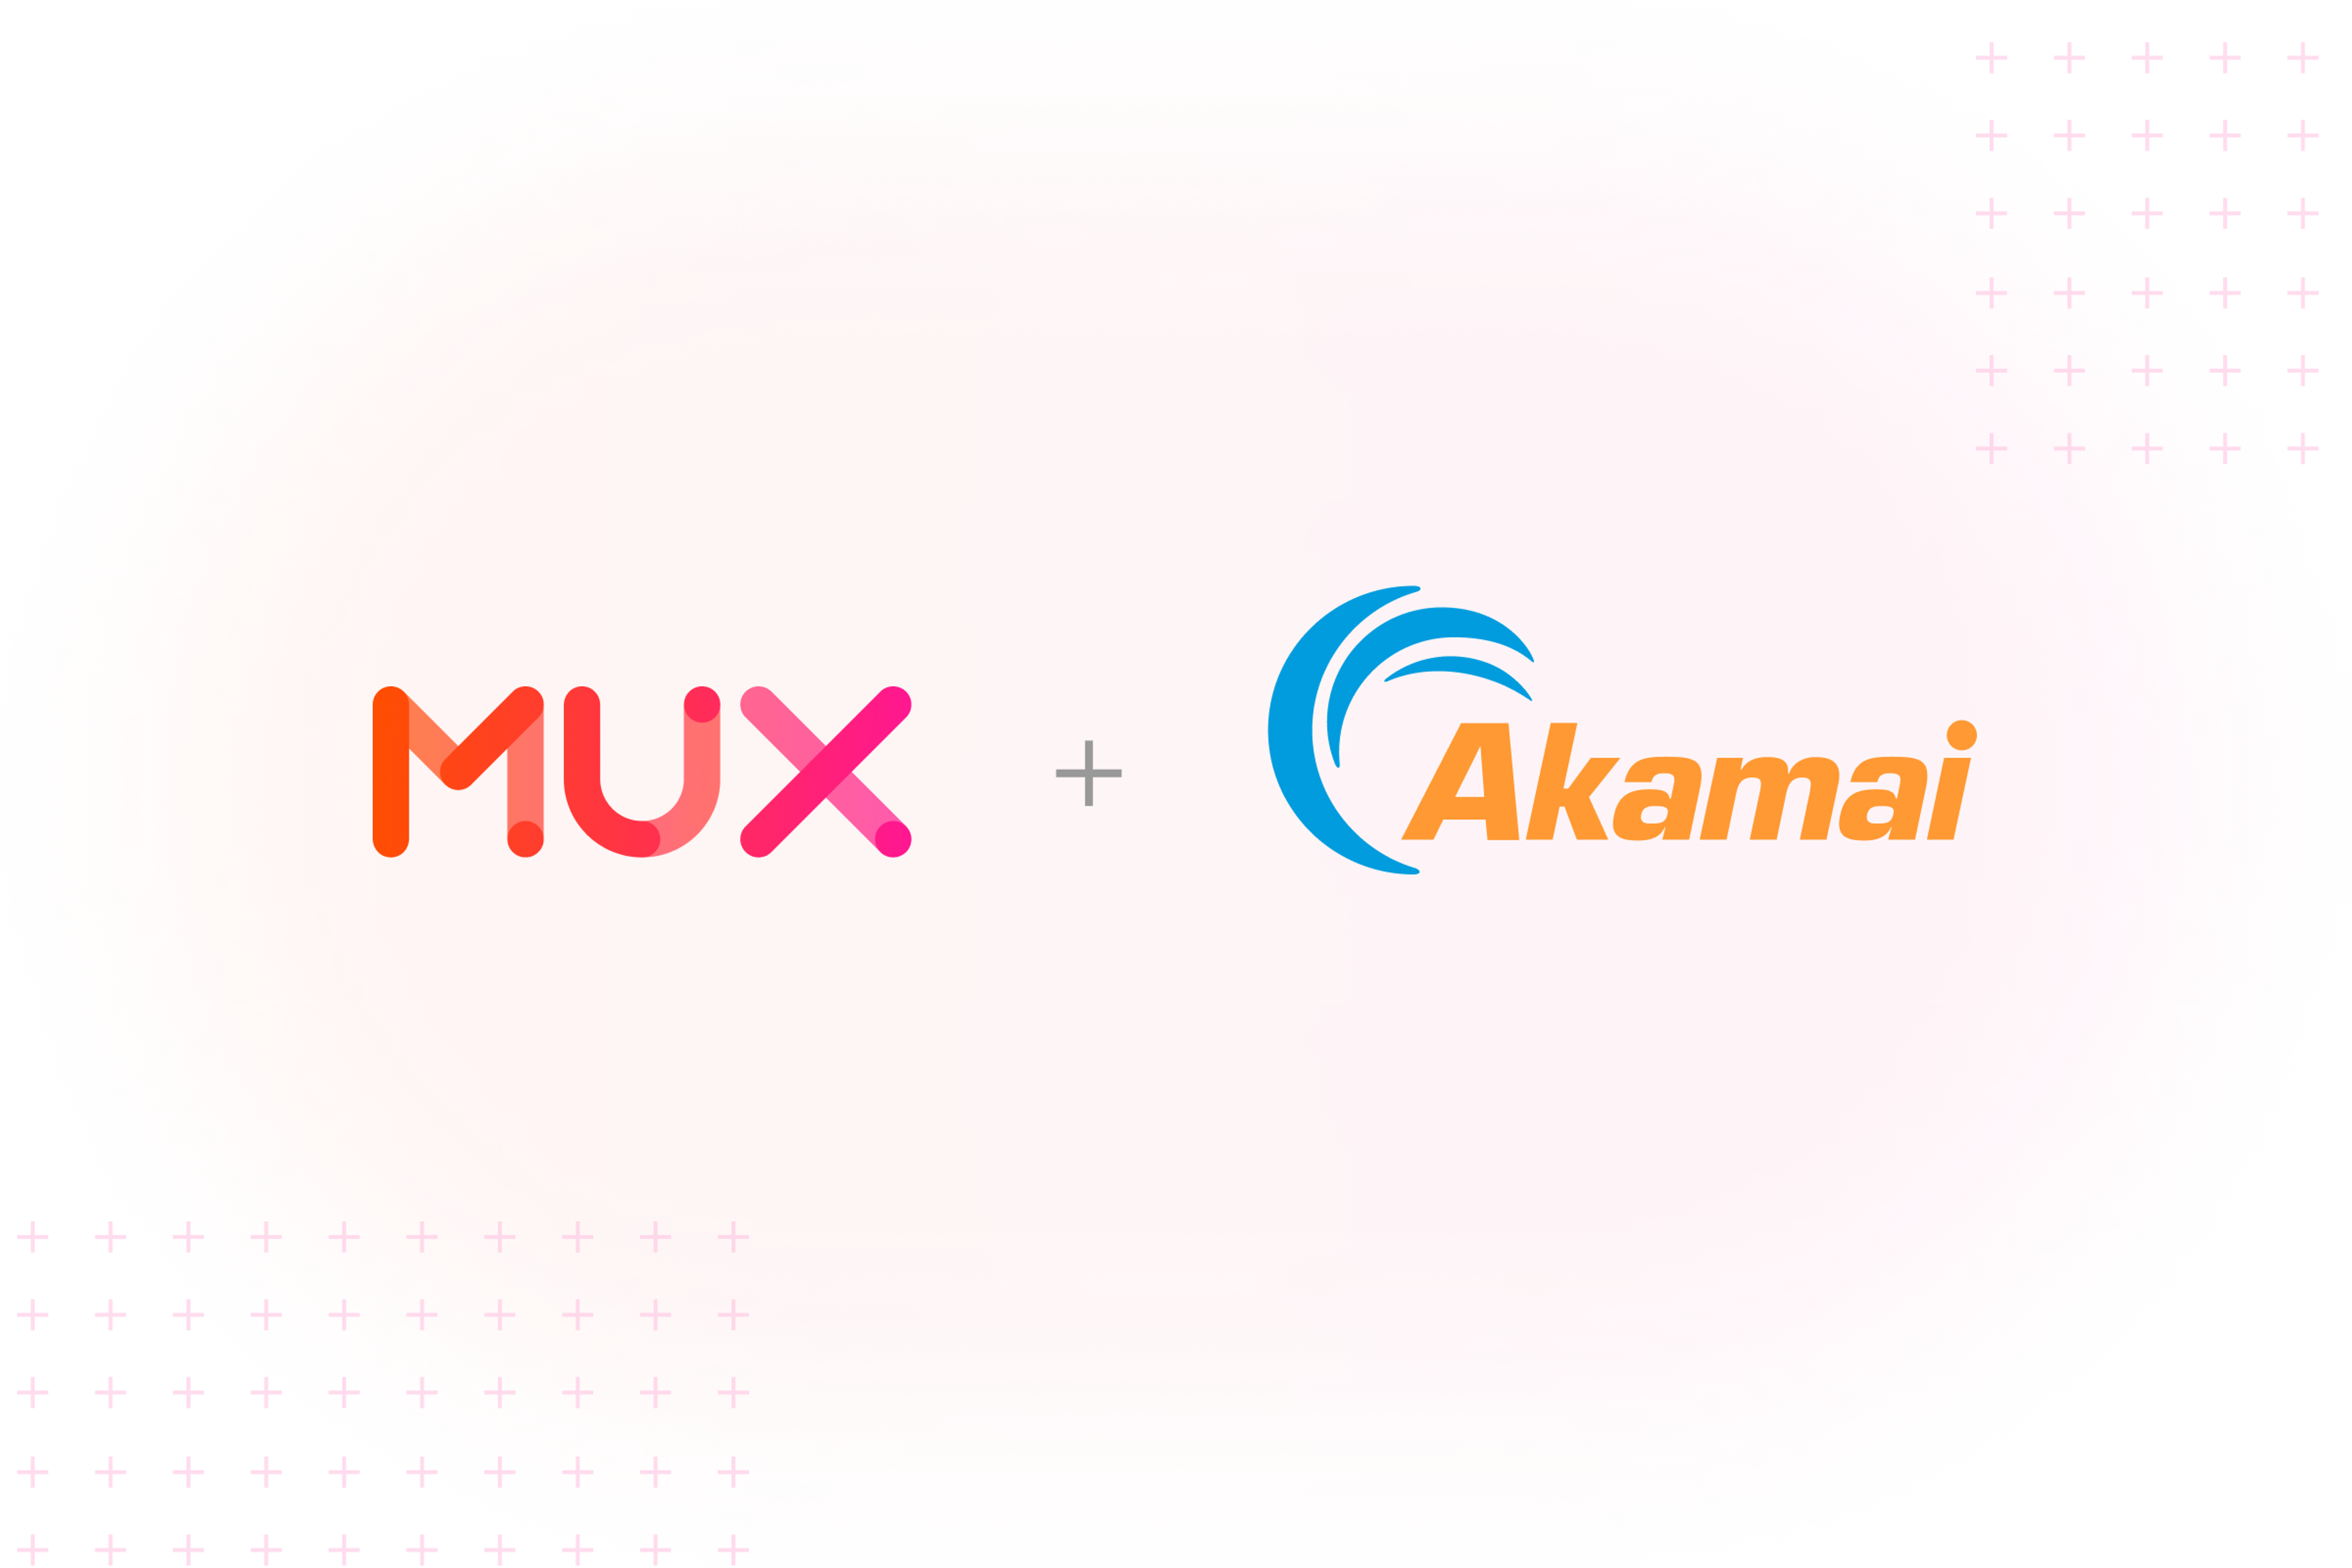 Image of Mux's logo plus Akamai's logo